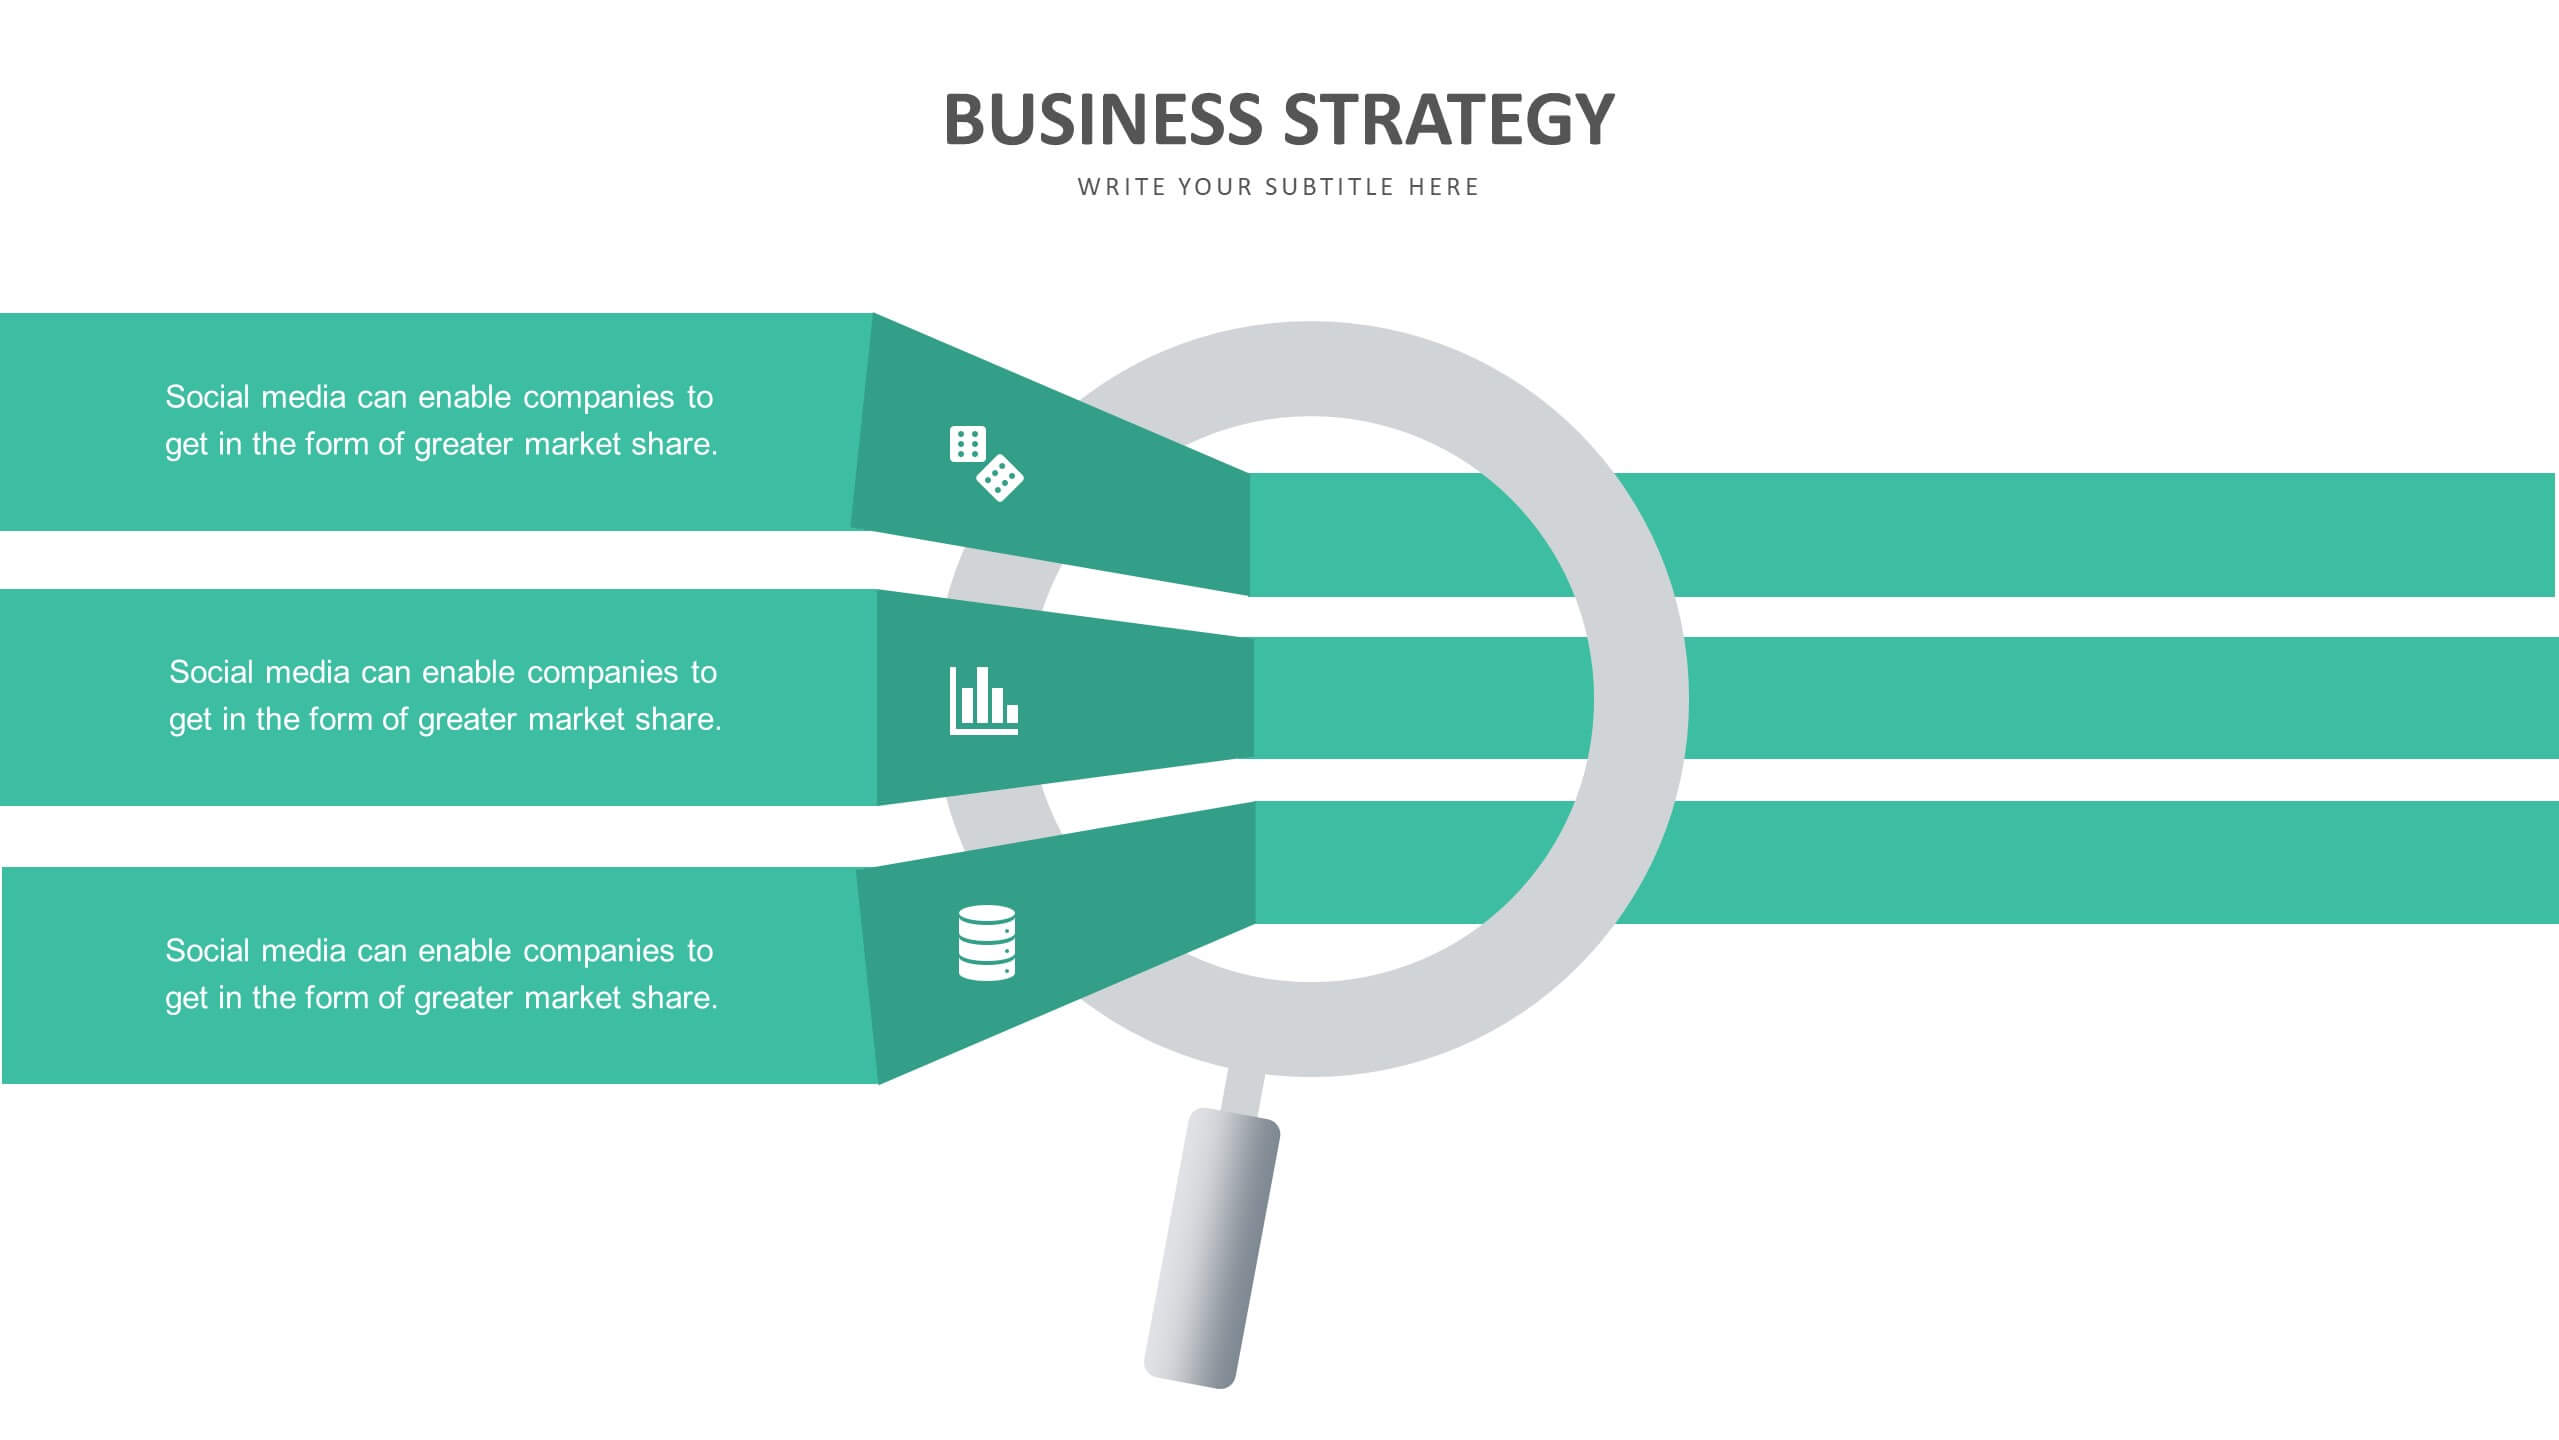 Strategy Slide Templates Biz Infograph